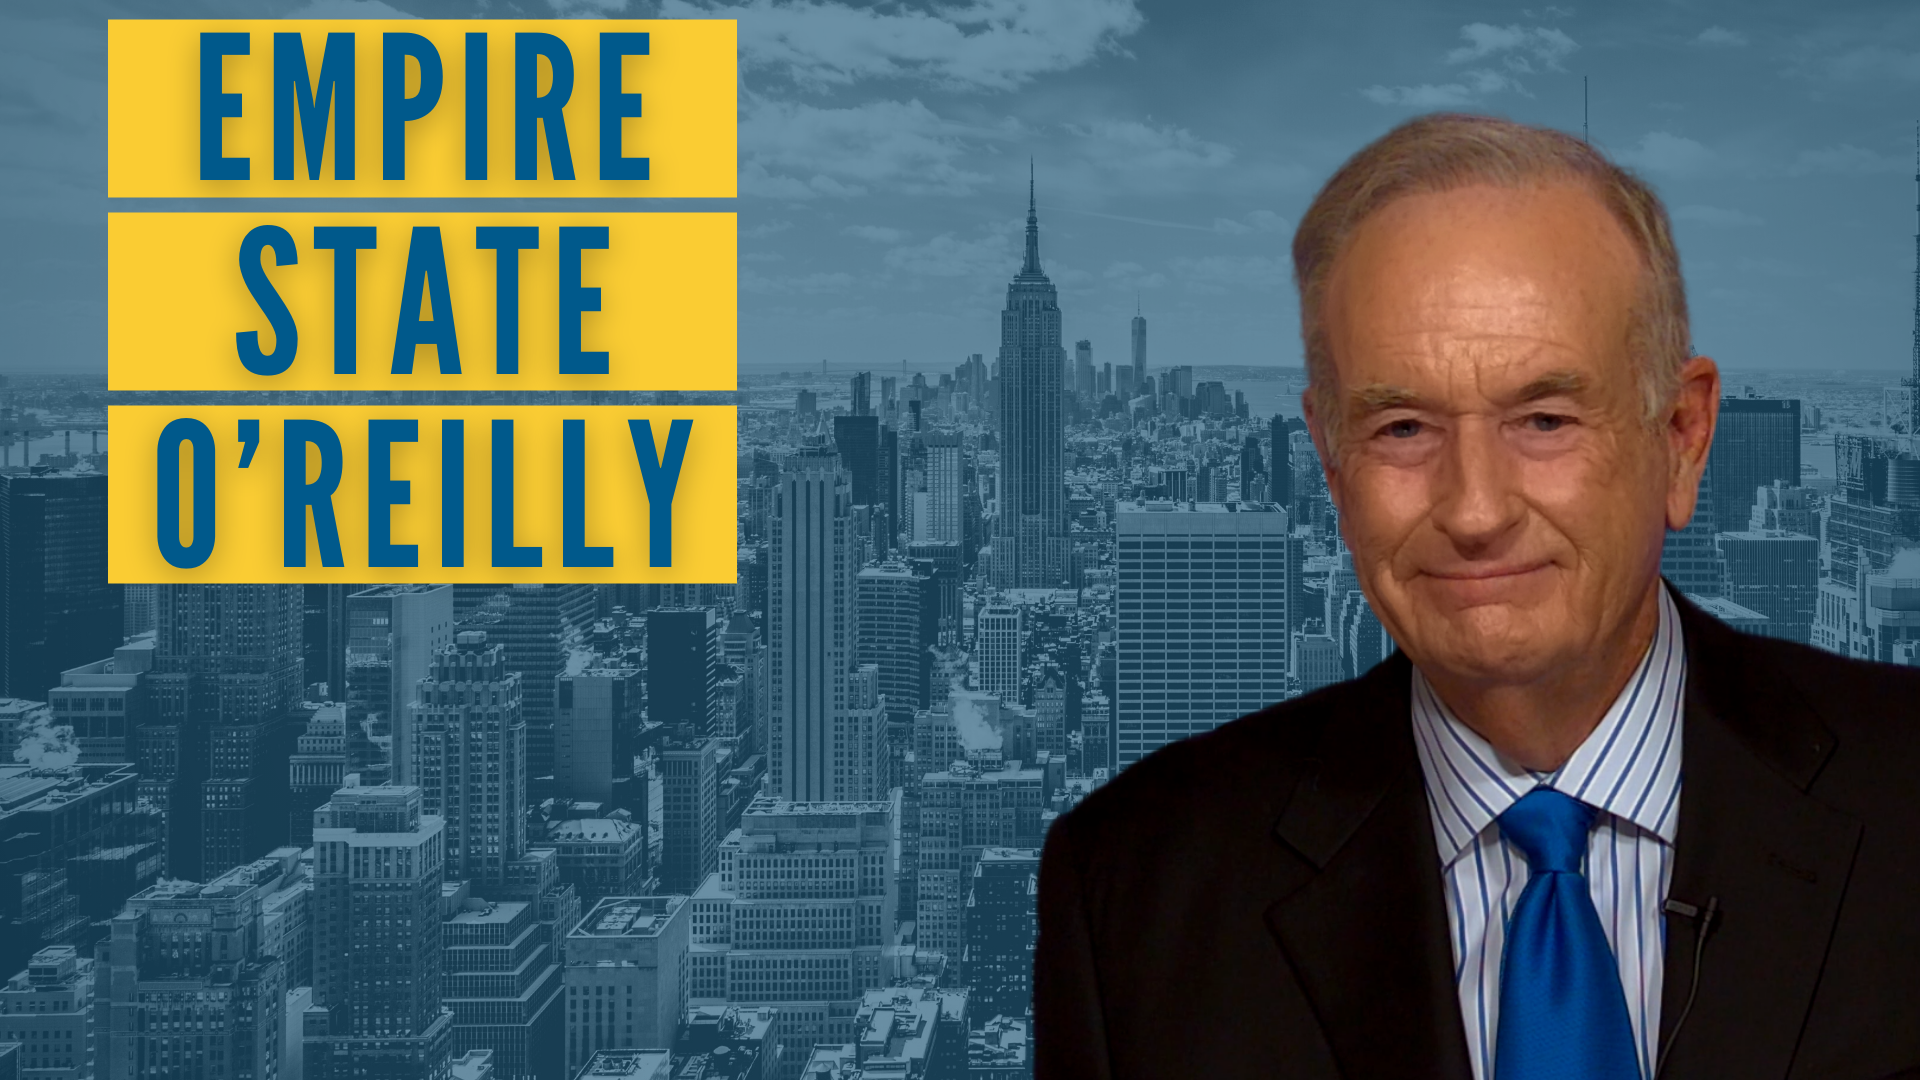 Empire State O'Reilly: Zach Wilson